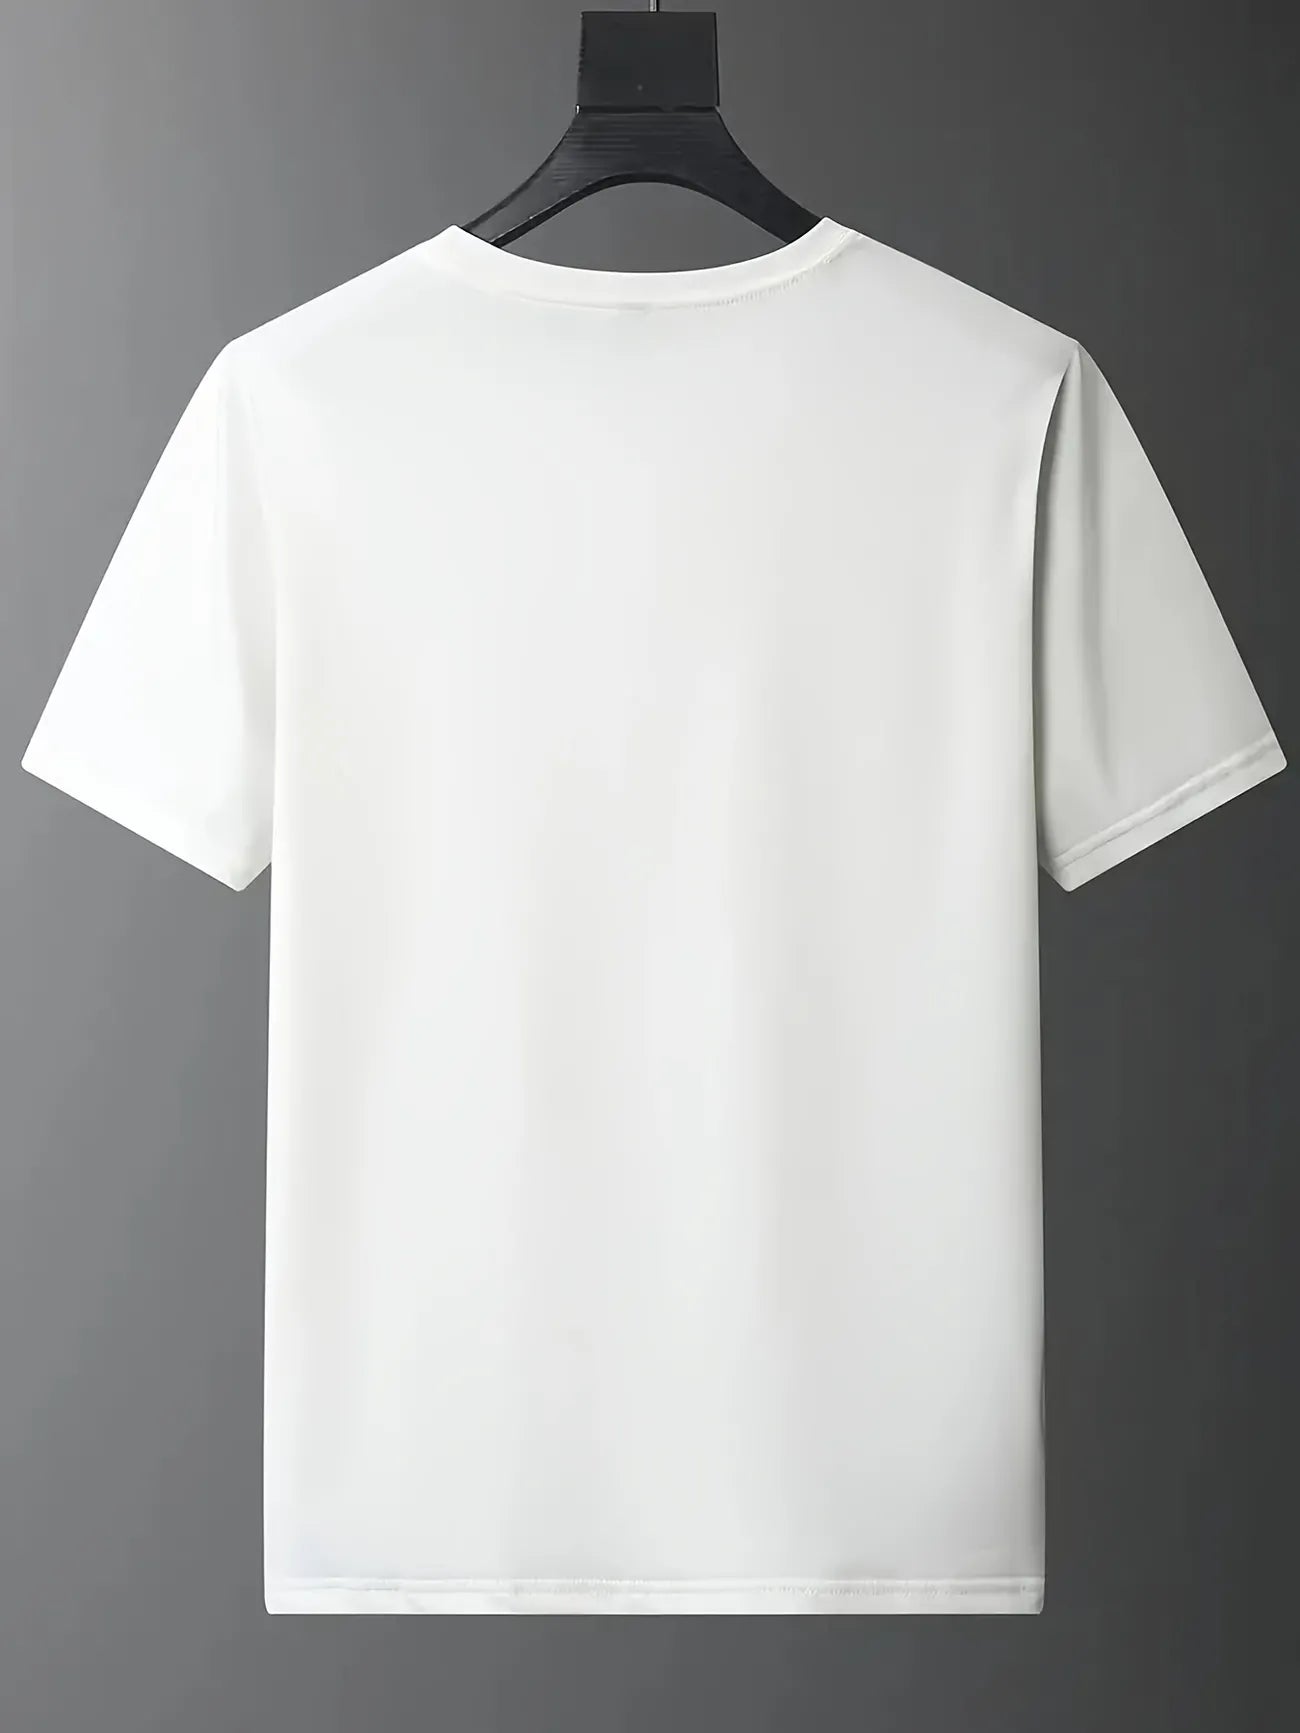 Mens Cotton Sticker Printed T-Shirt by Tee Tall TTMPS106 - White